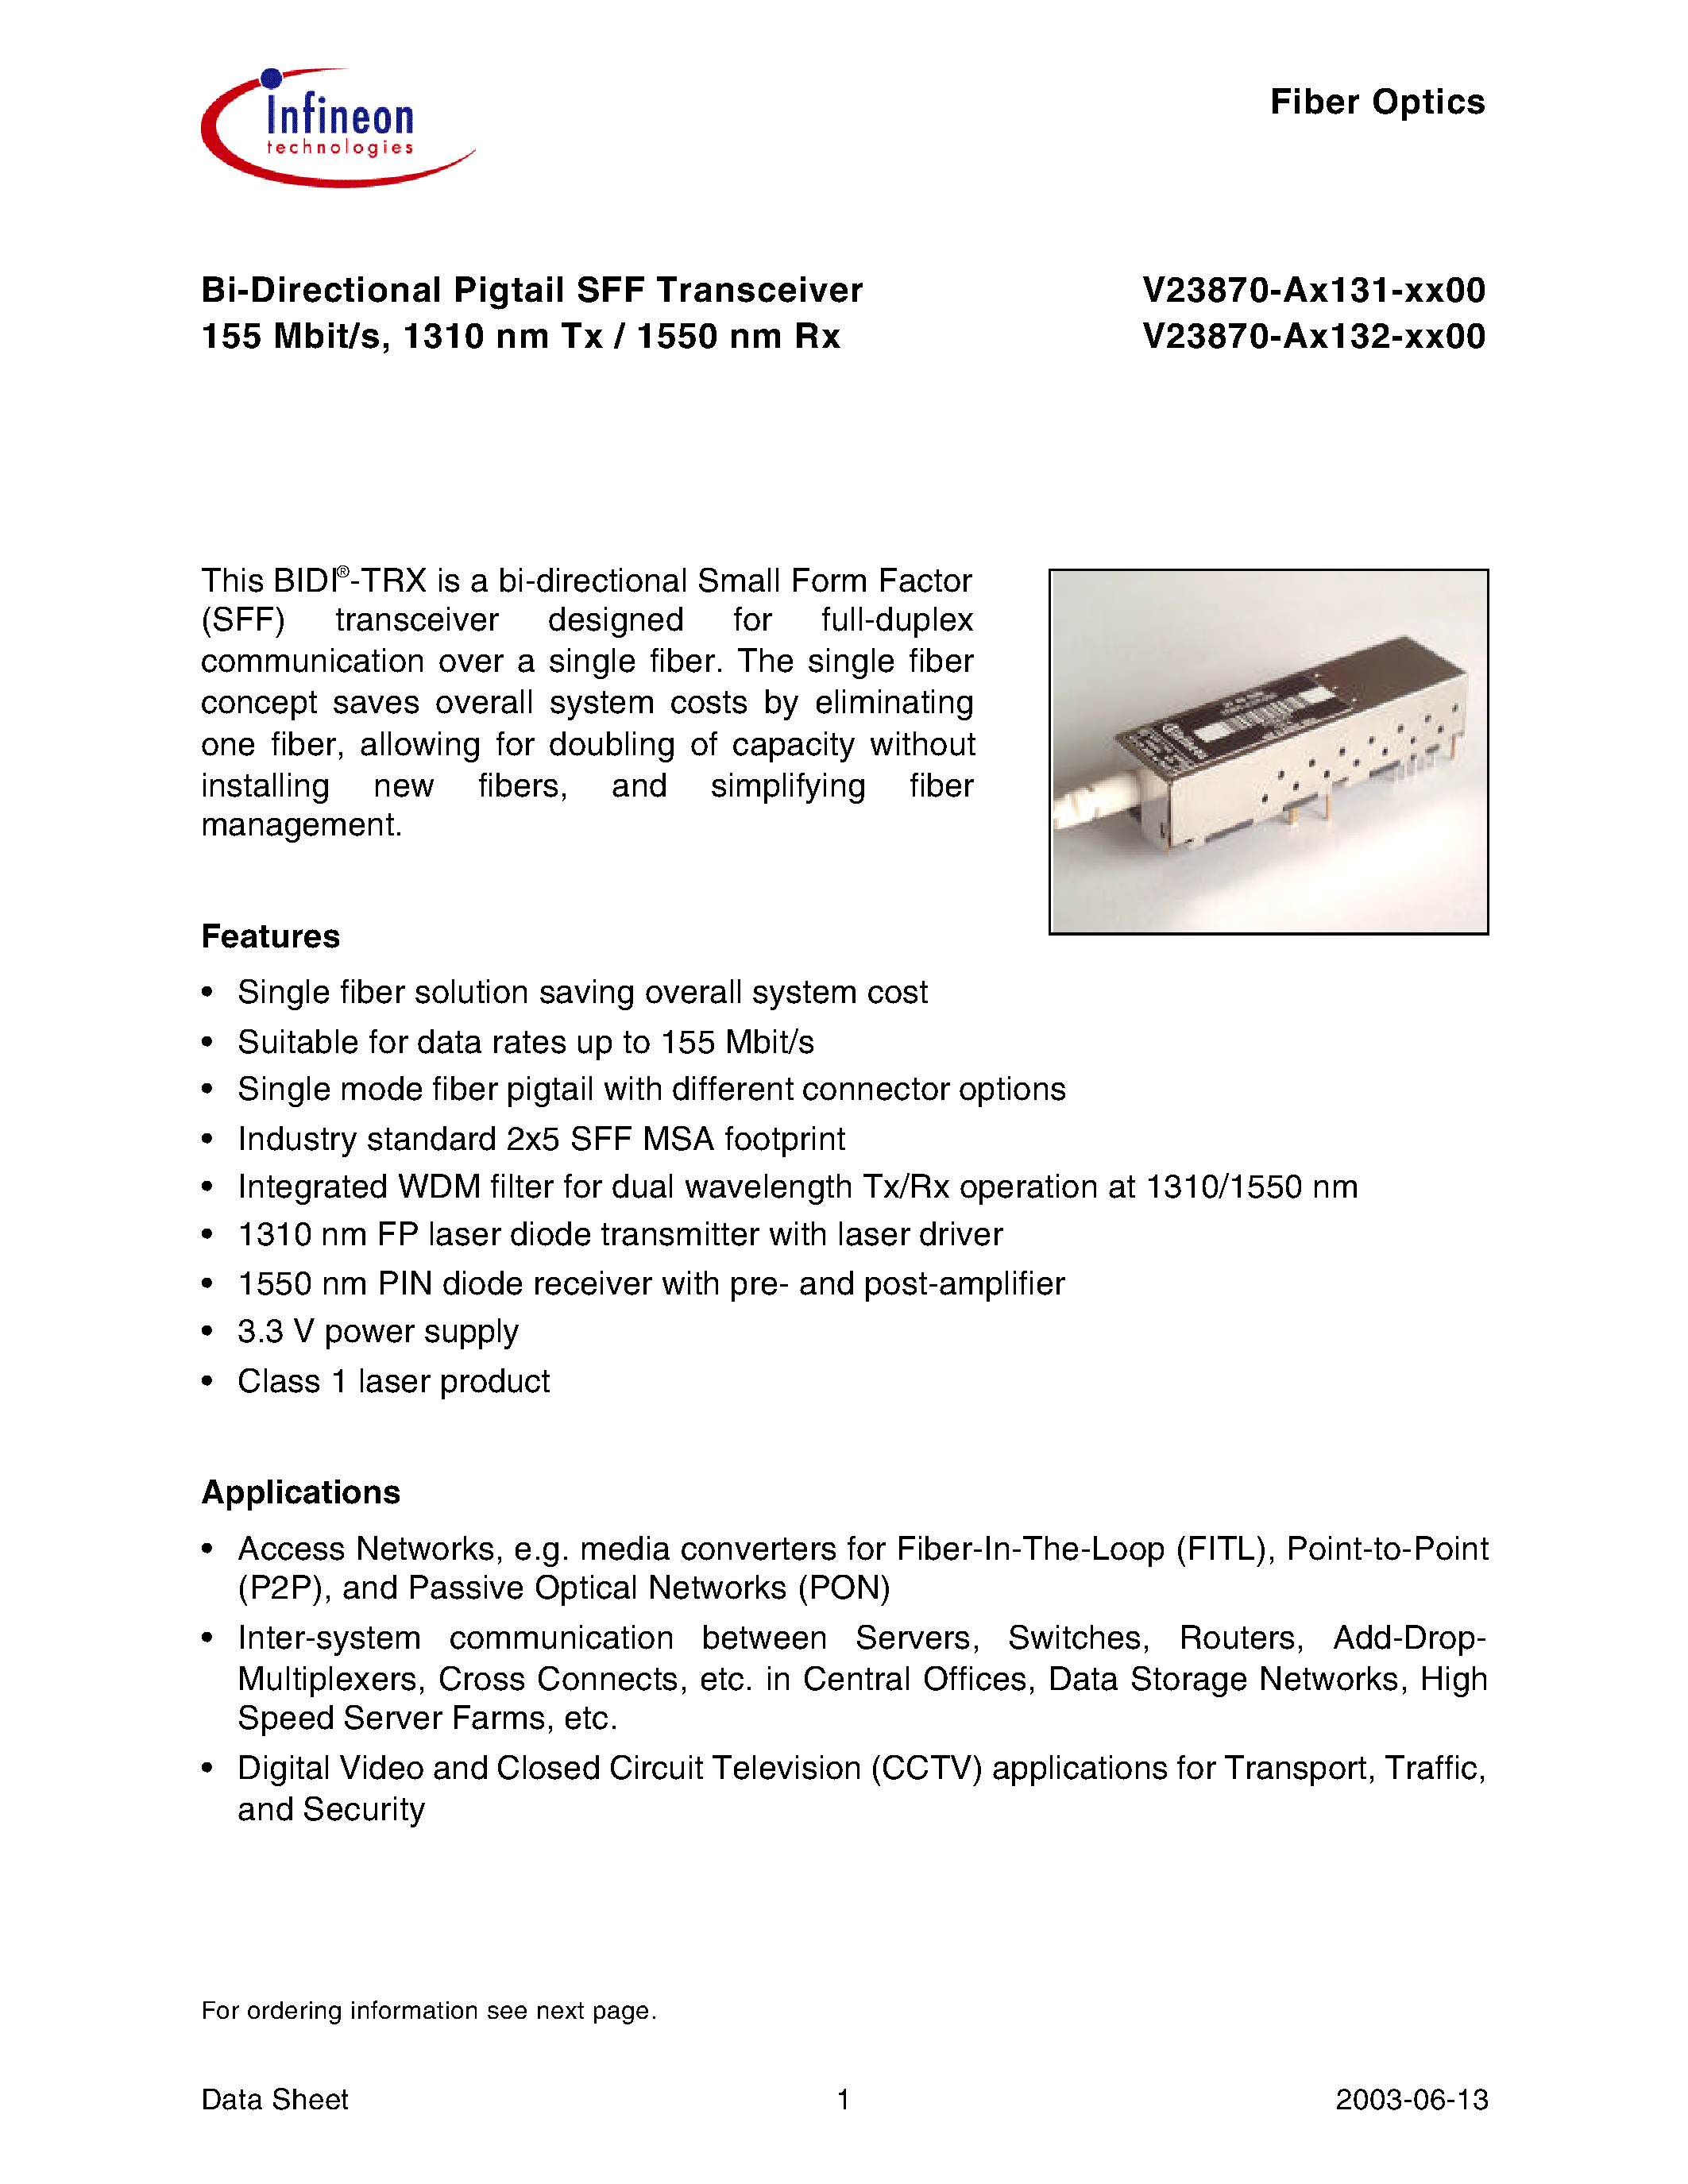 Даташит V23870-A3131-B100 - Bi-Directional Pigtail SFF Transceiver 155 Mbit/s/ 1310 nm Tx / 1550 nm Rx страница 1